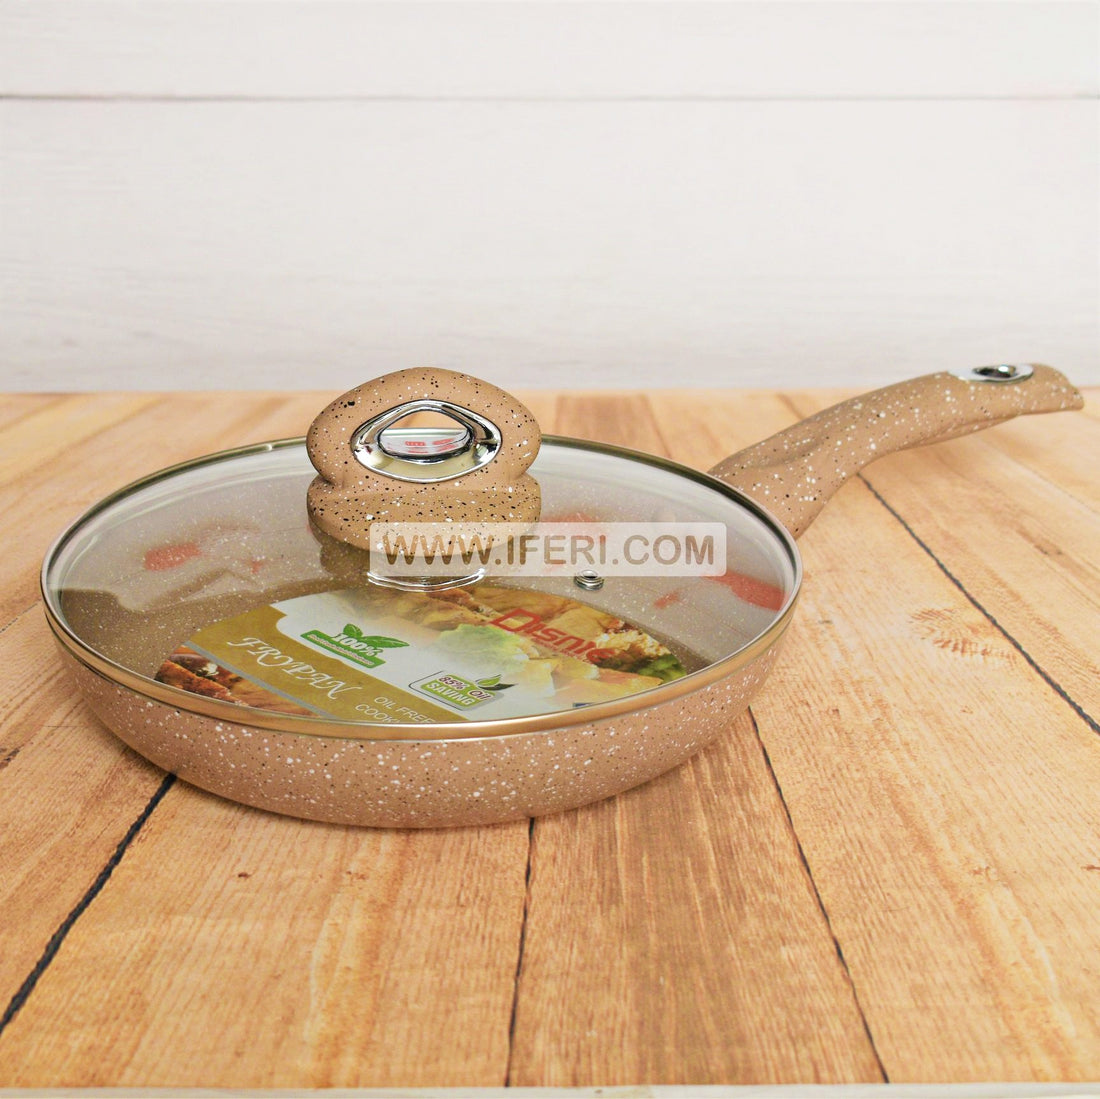 Buy Disnie Non-stick Marble Coated Fry Pan through iferi.com in Bangladesh